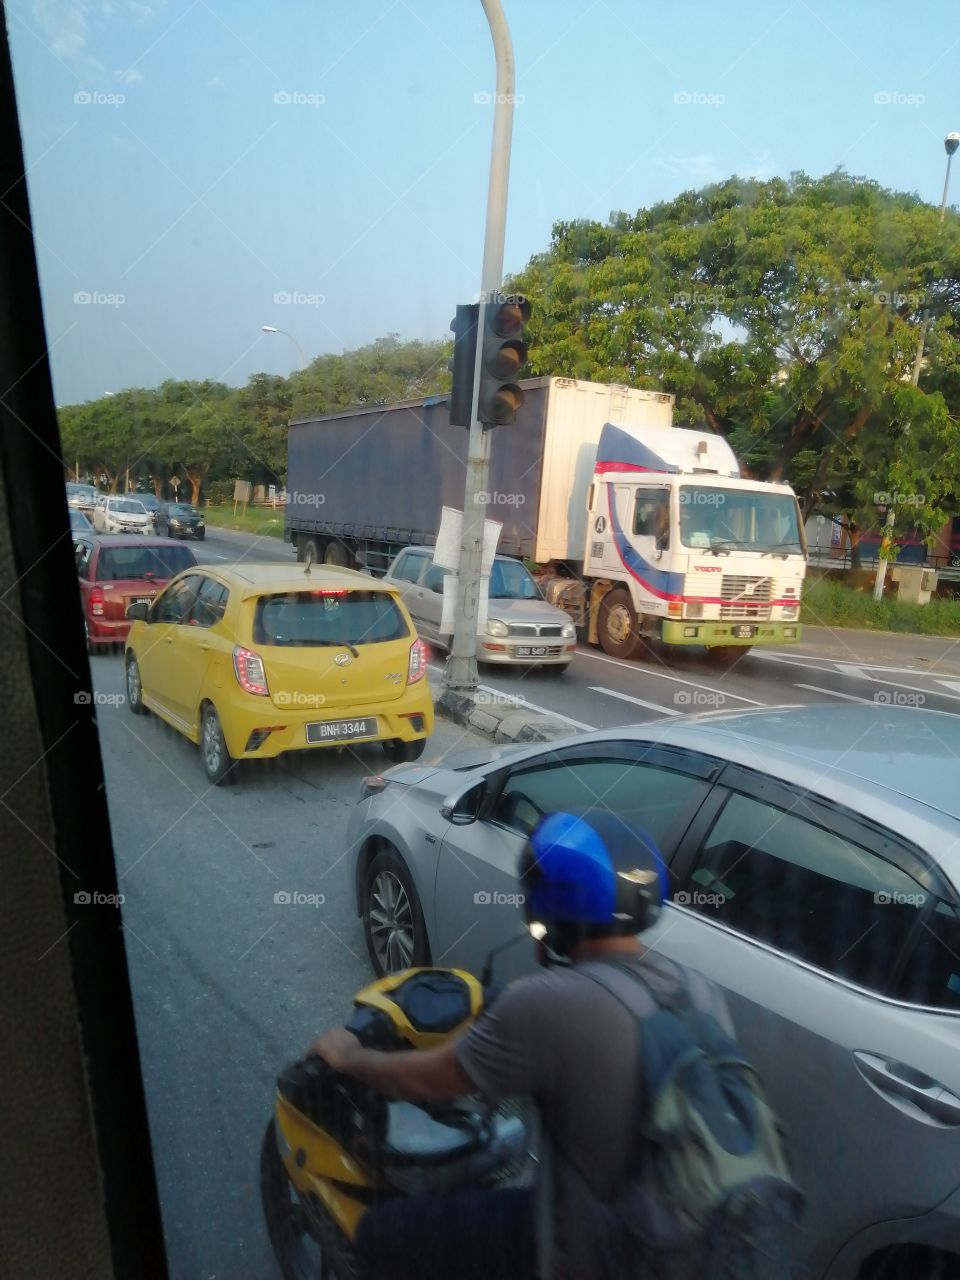 Malaysian everyday road